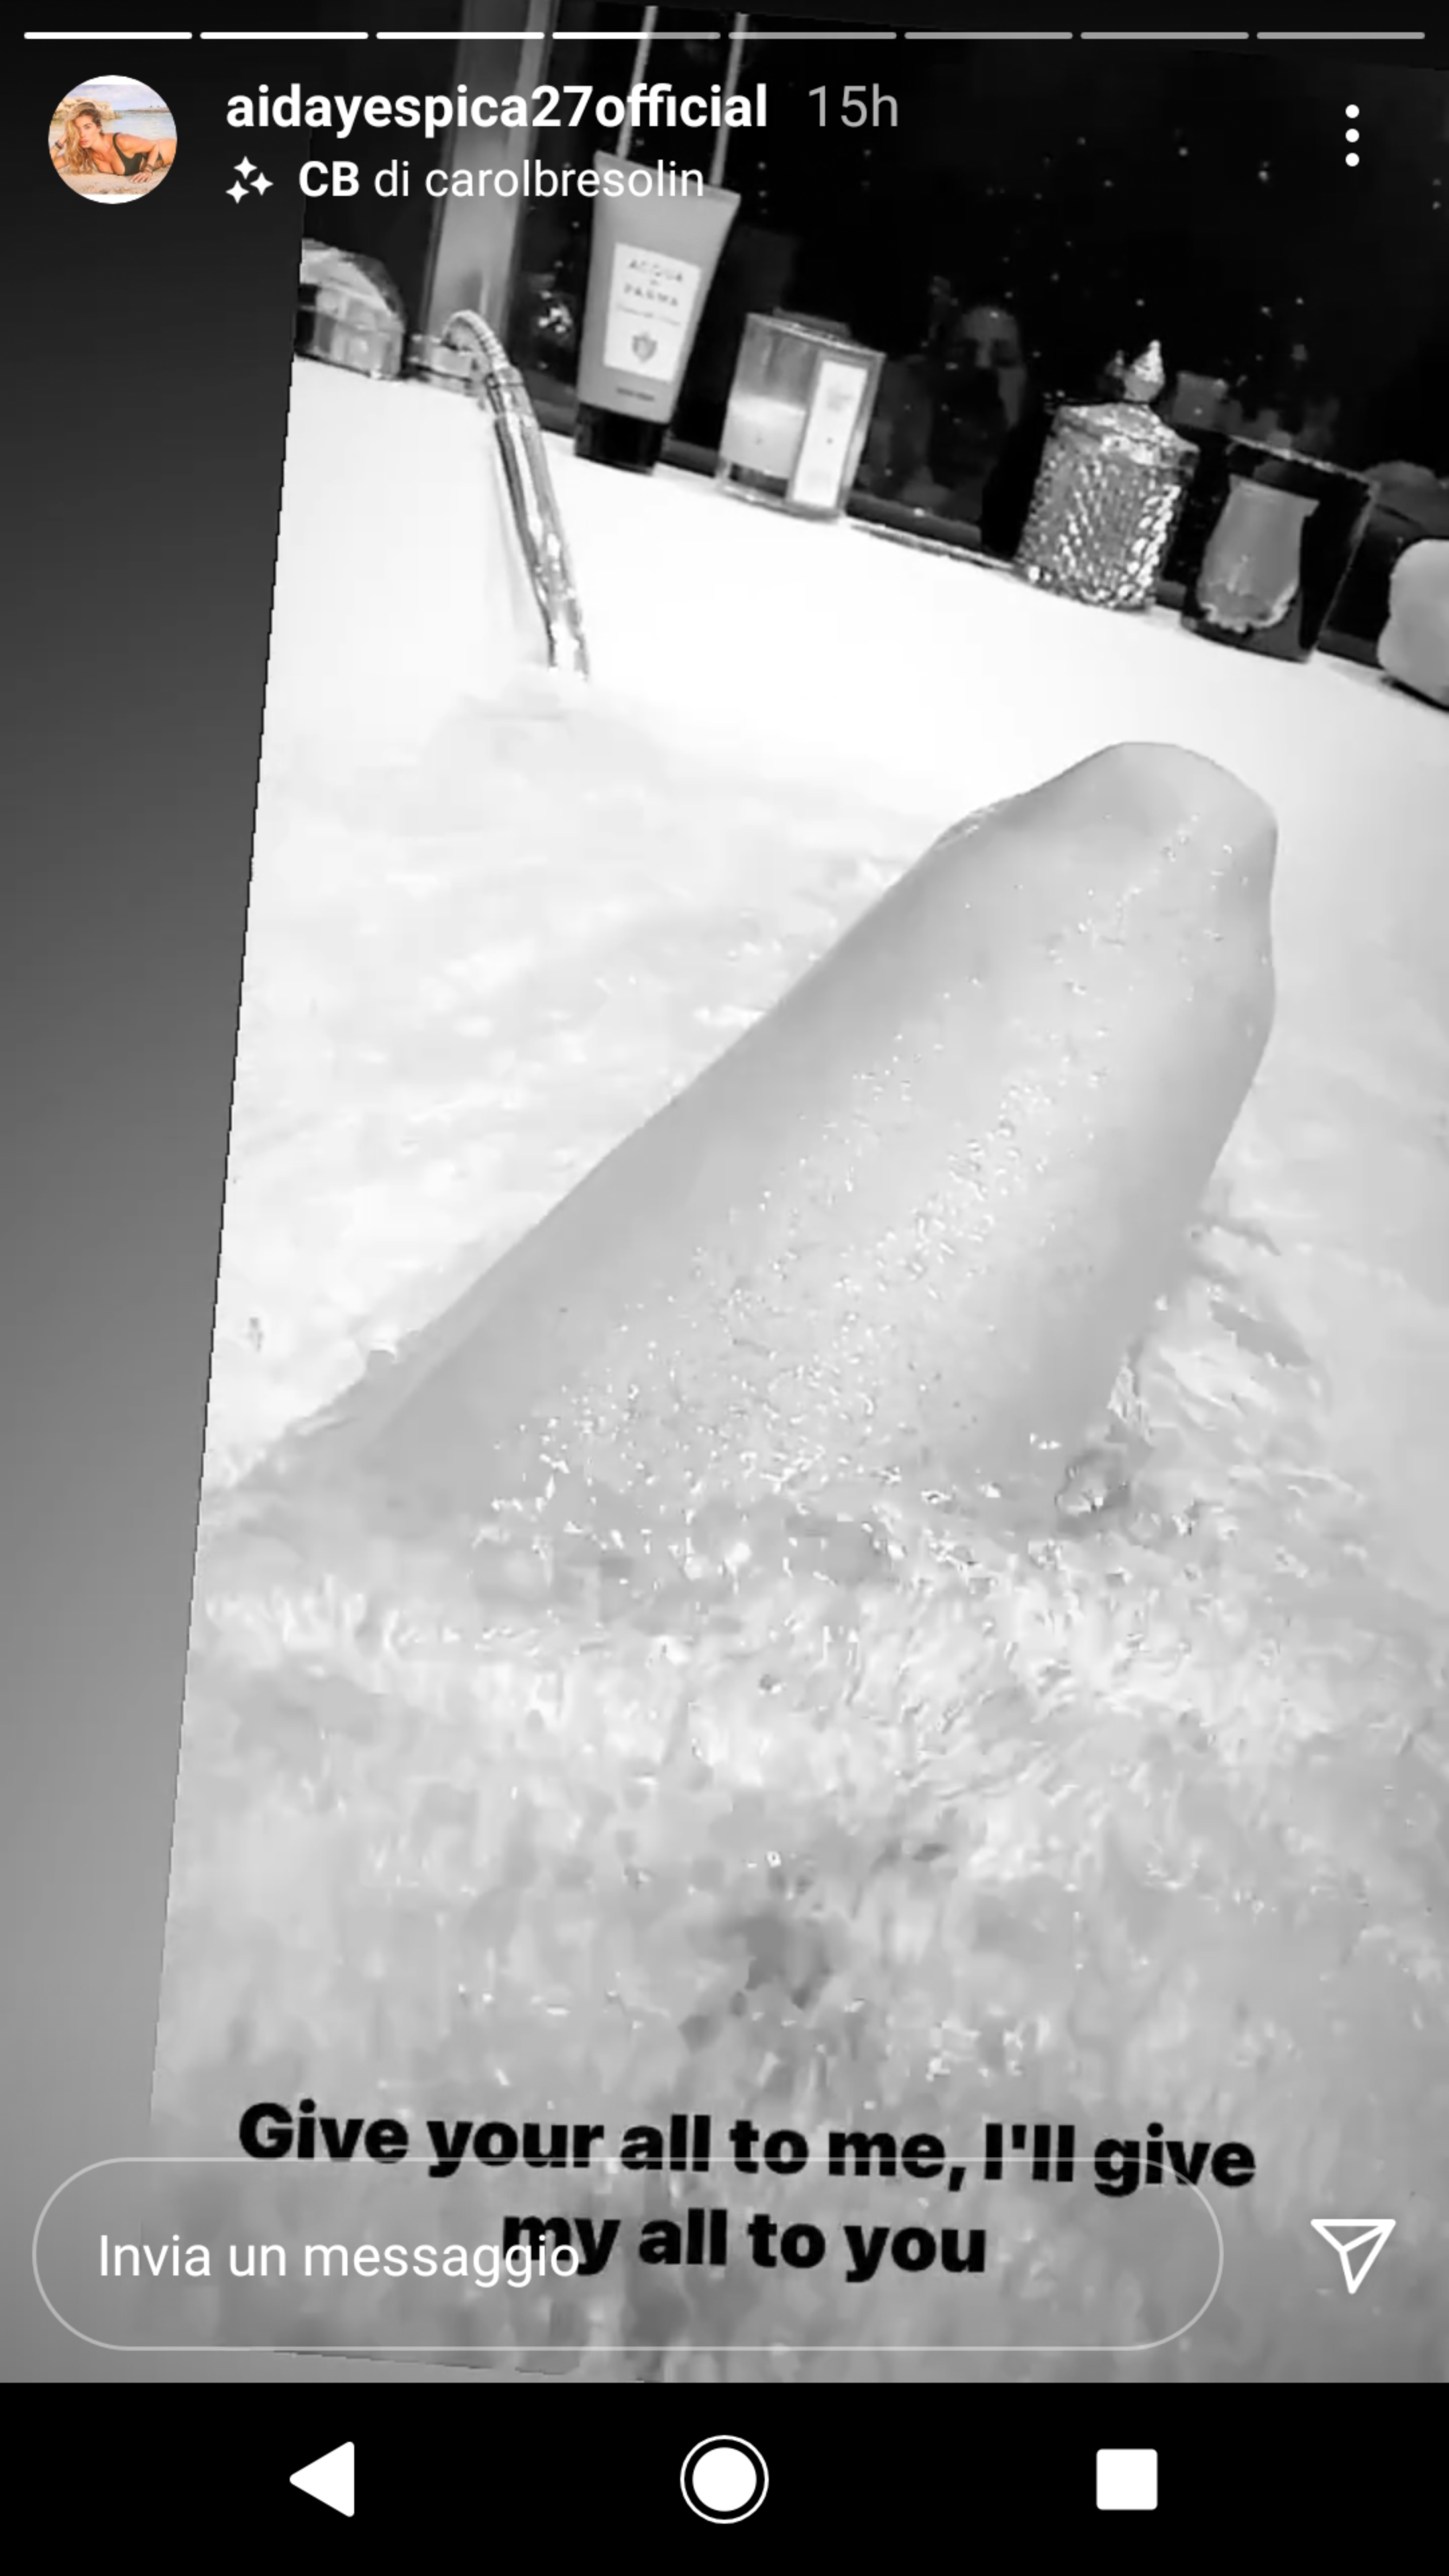 Aida Yespica nuda vasca acqua bolle atomica